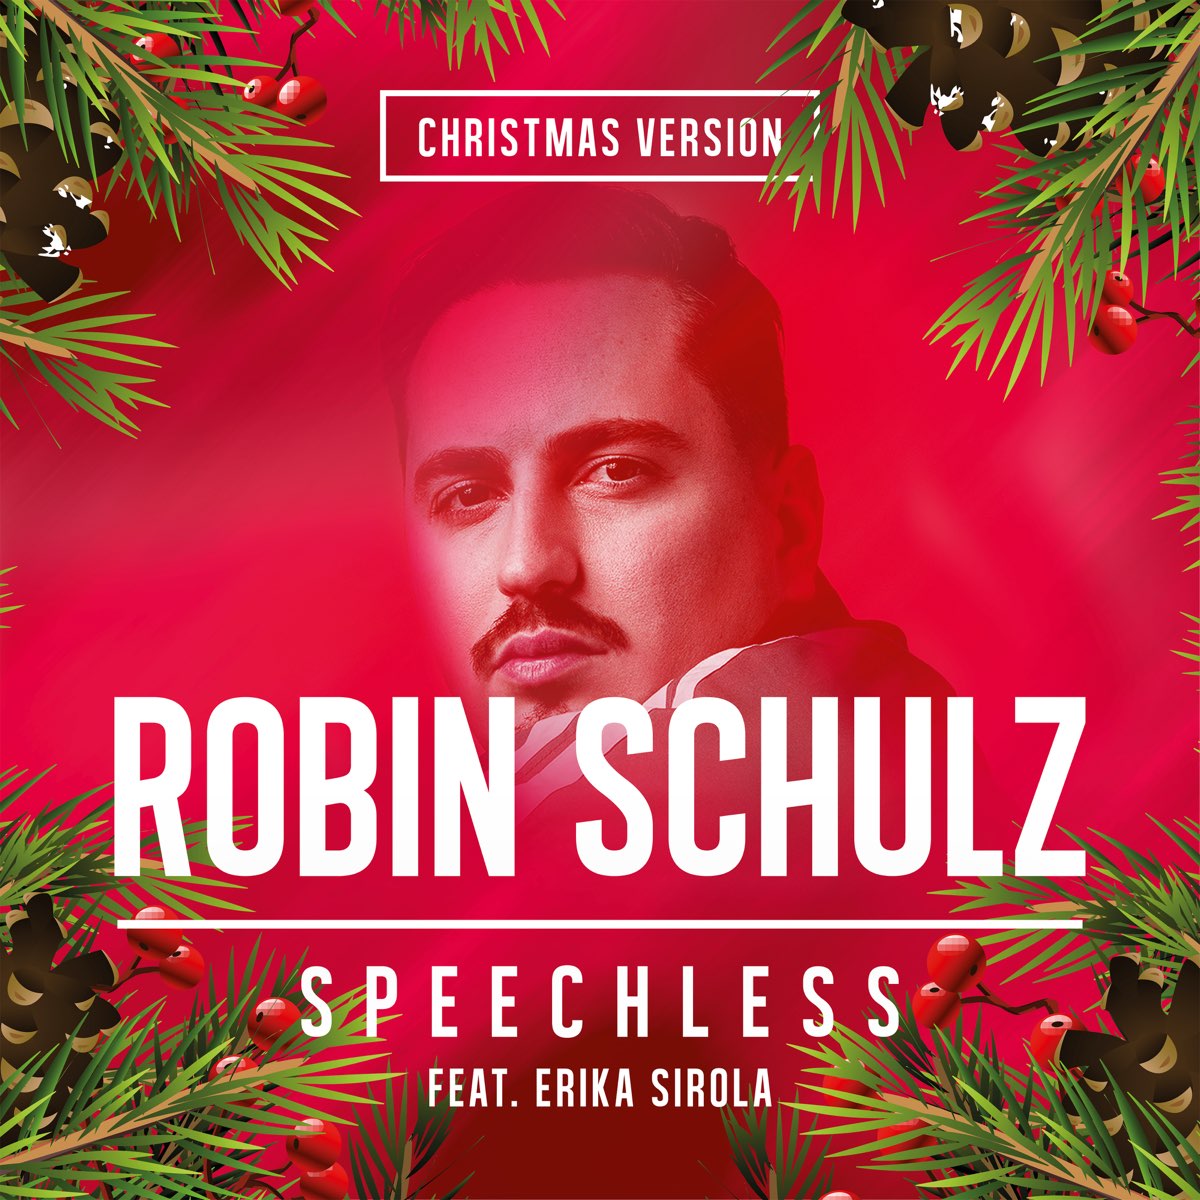 Speechless (feat. Erika Sirola) [Christmas Version] - Single by Robin Schulz  on Apple Music